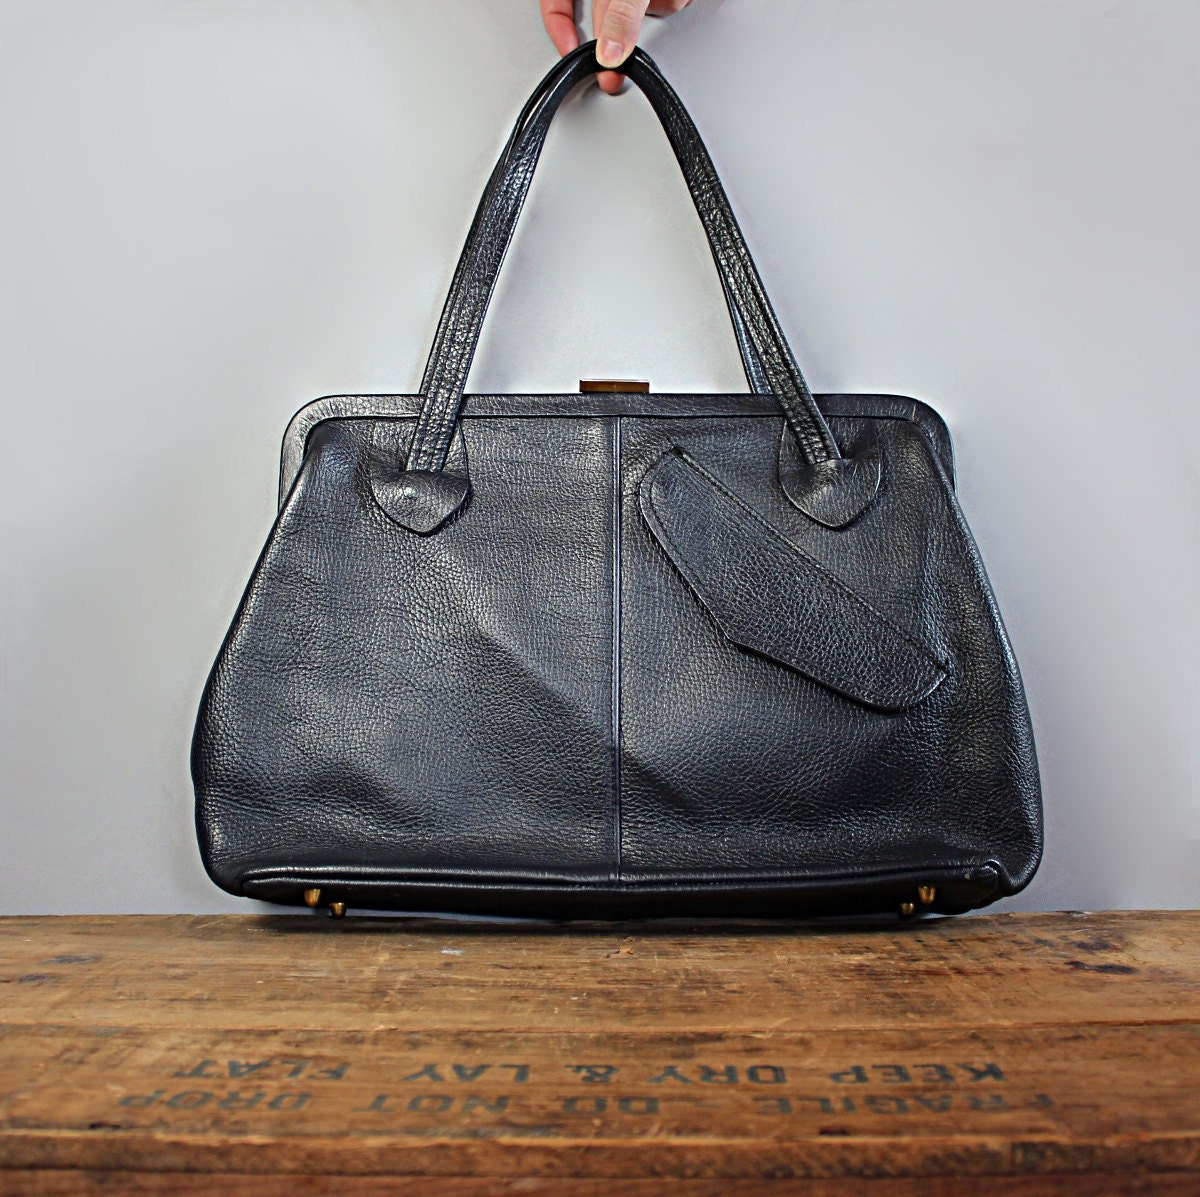 CLEARANCE SALE vintage 1960s purse // 60s mod leather bag